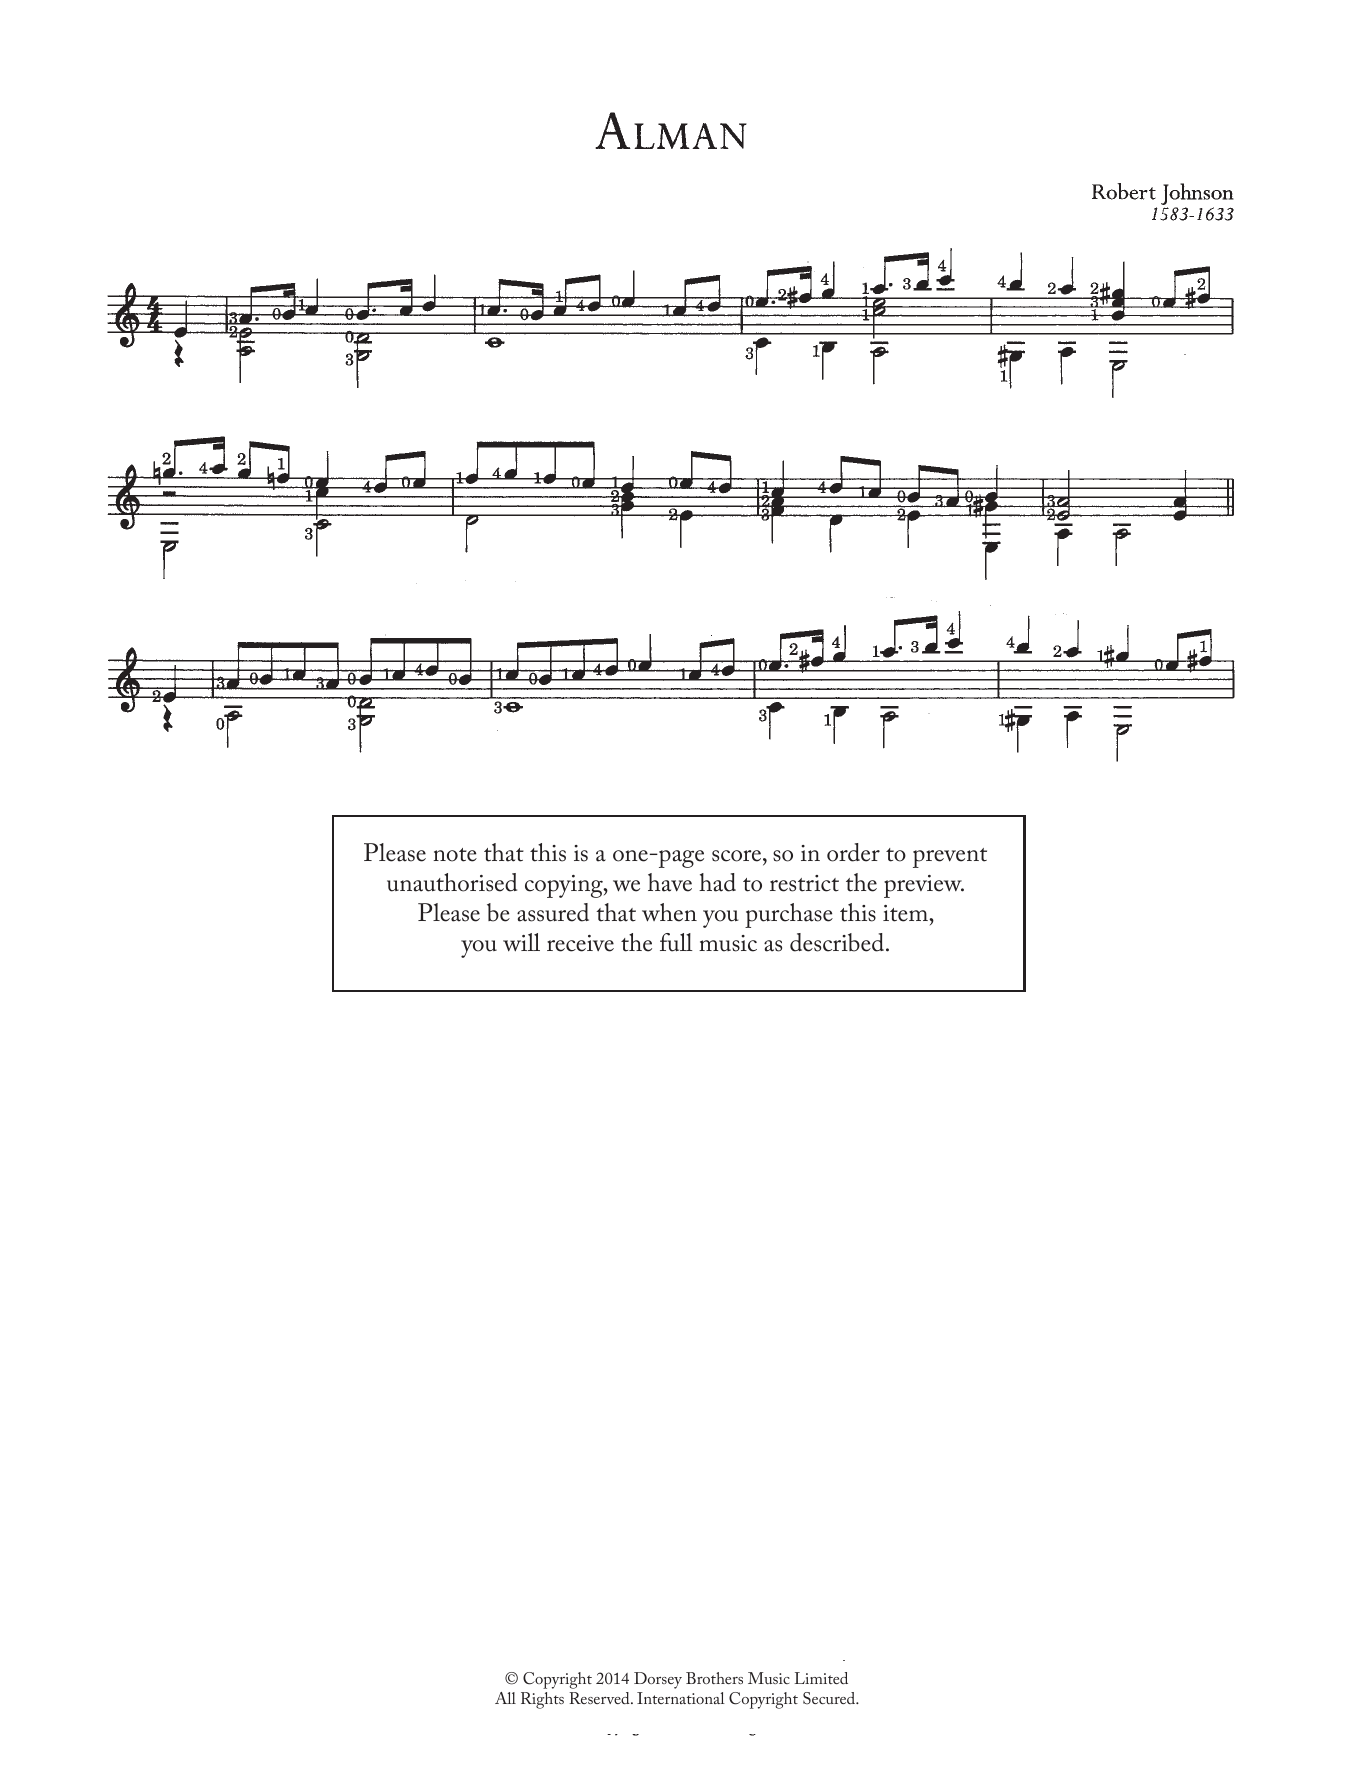 Robert Johnson II Alman Sheet Music Notes & Chords for Guitar - Download or Print PDF